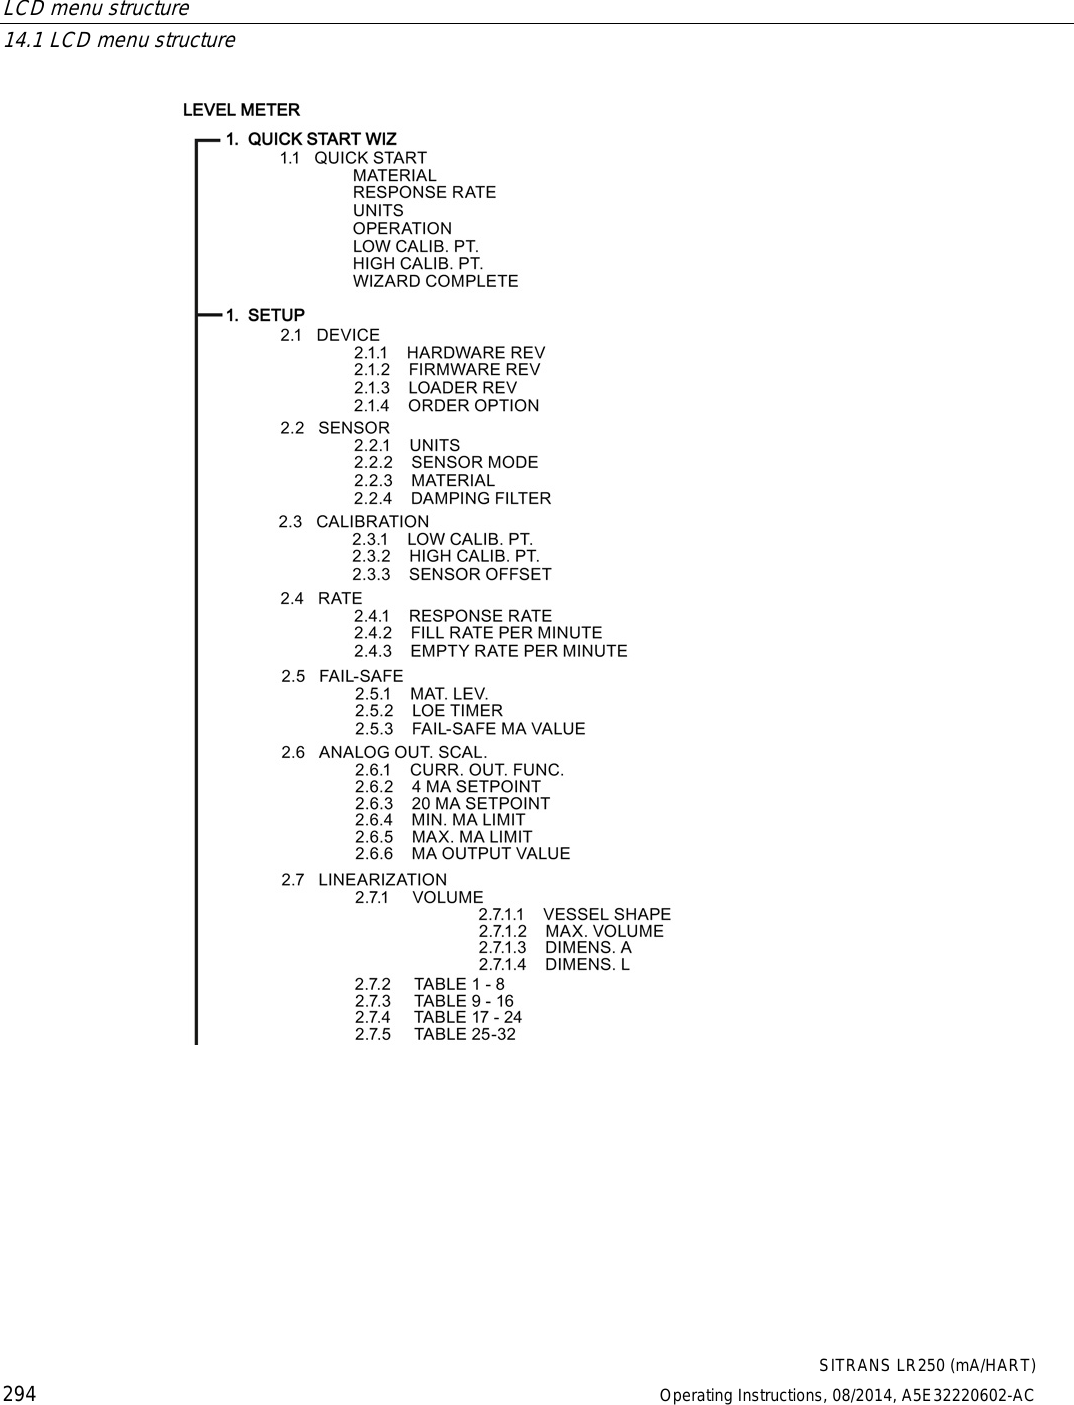 LCD menu structure   14.1 LCD menu structure  SITRANS LR250 (mA/HART) 294 Operating Instructions, 08/2014, A5E32220602-AC  